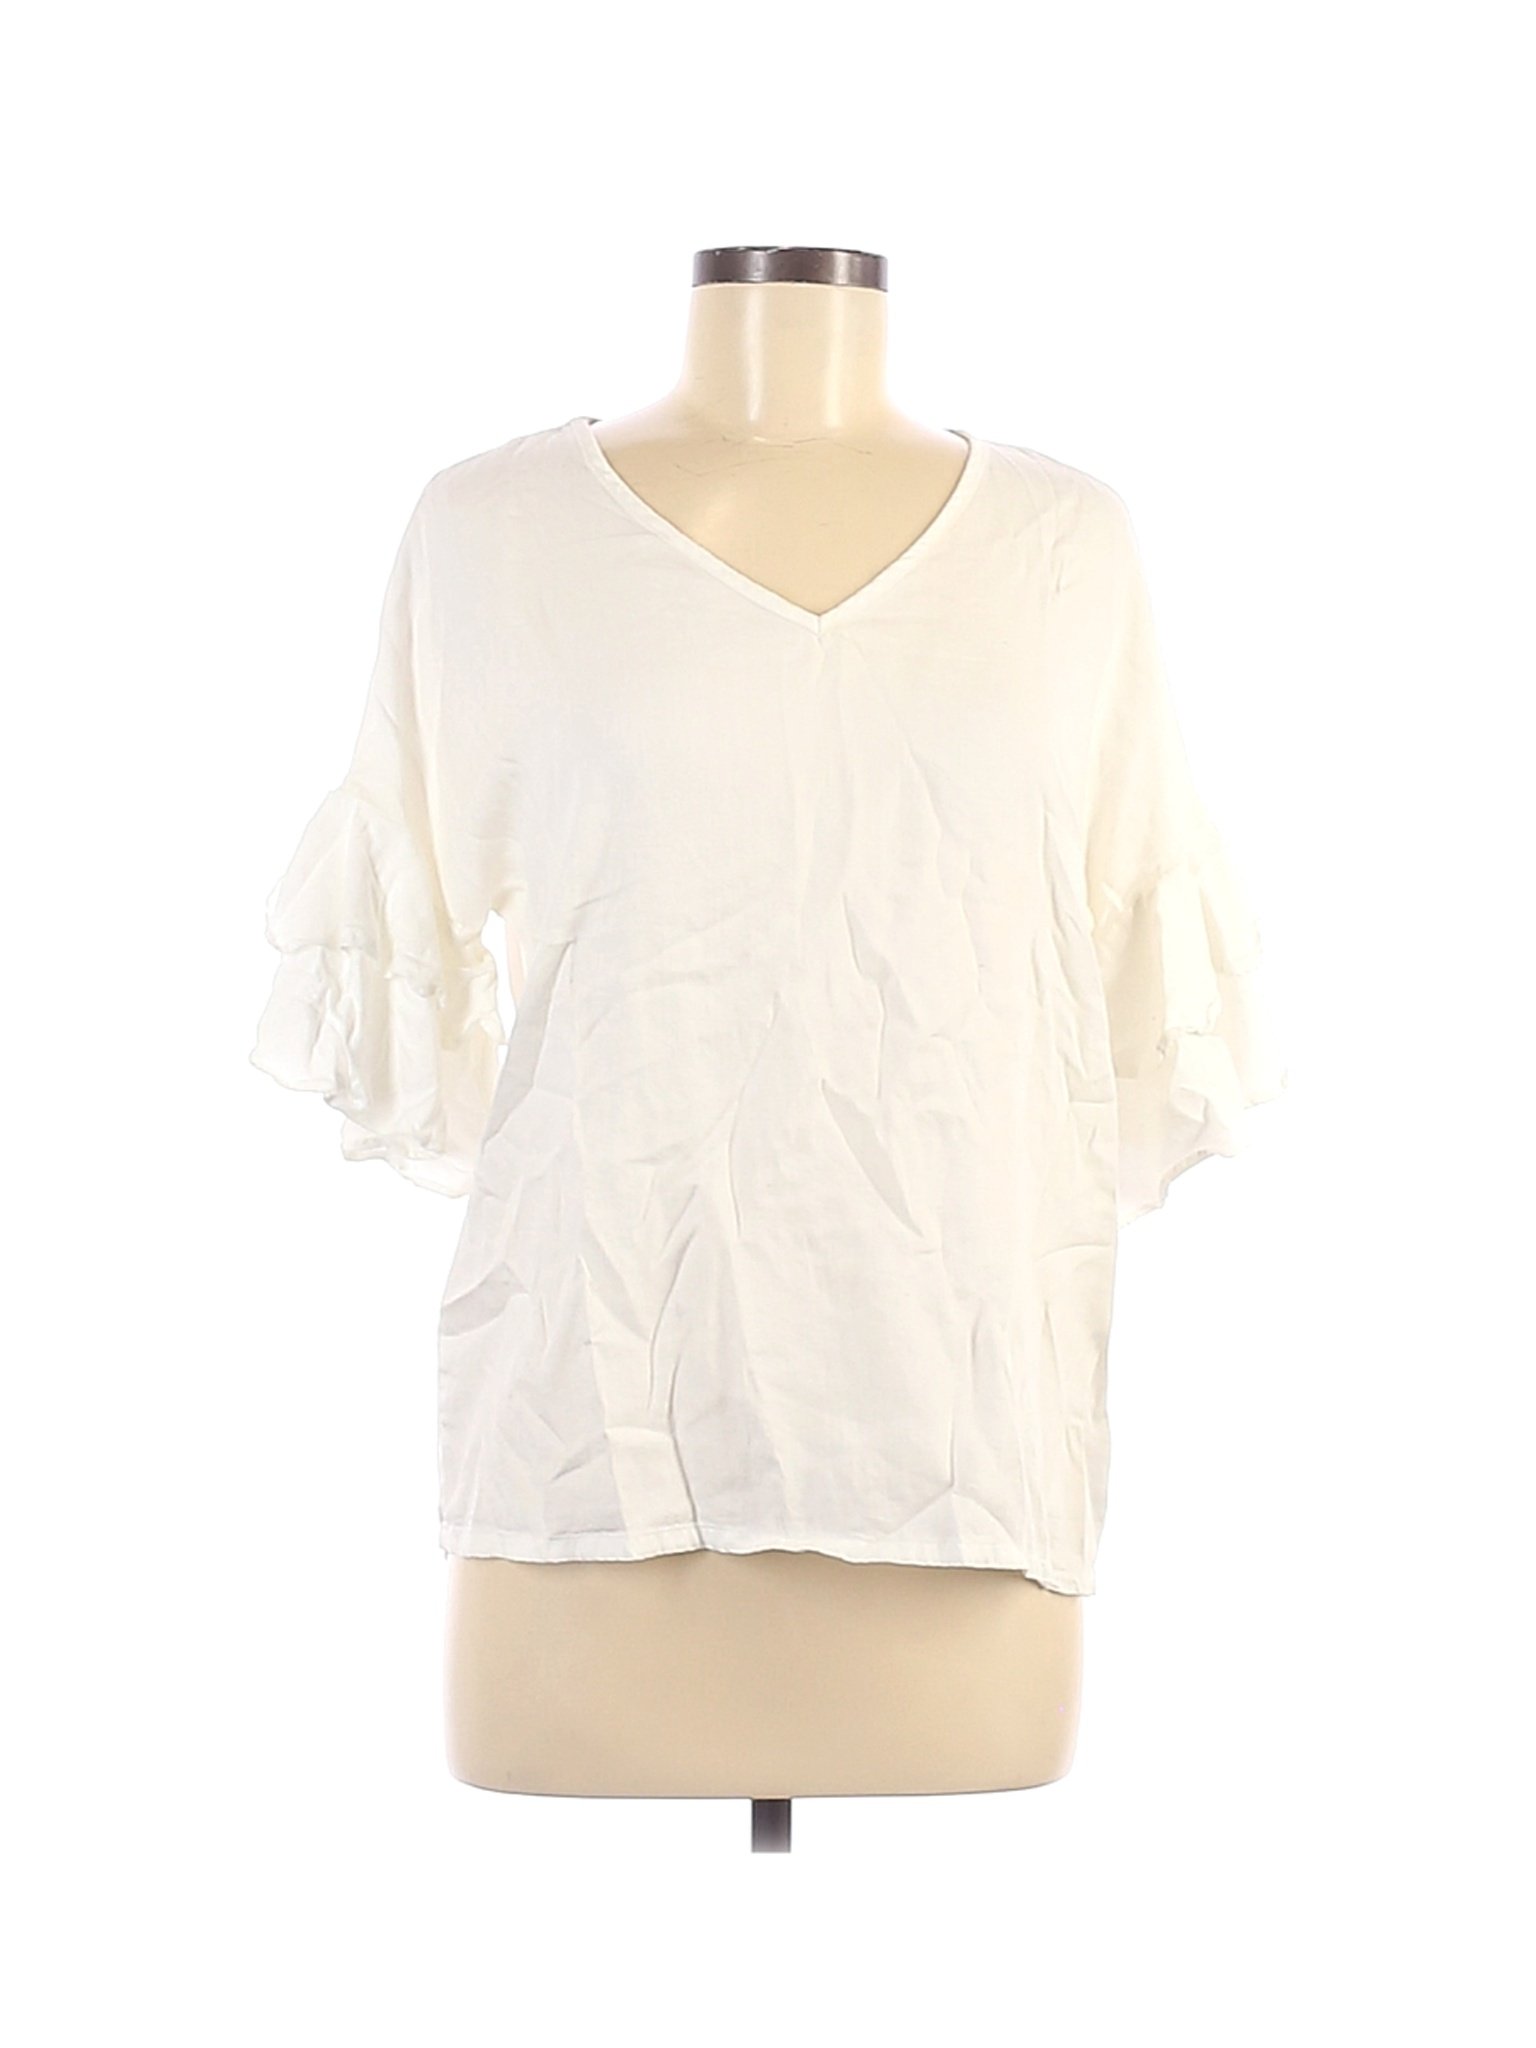 Assorted Brands Women Ivory 3/4 Sleeve Blouse M | eBay